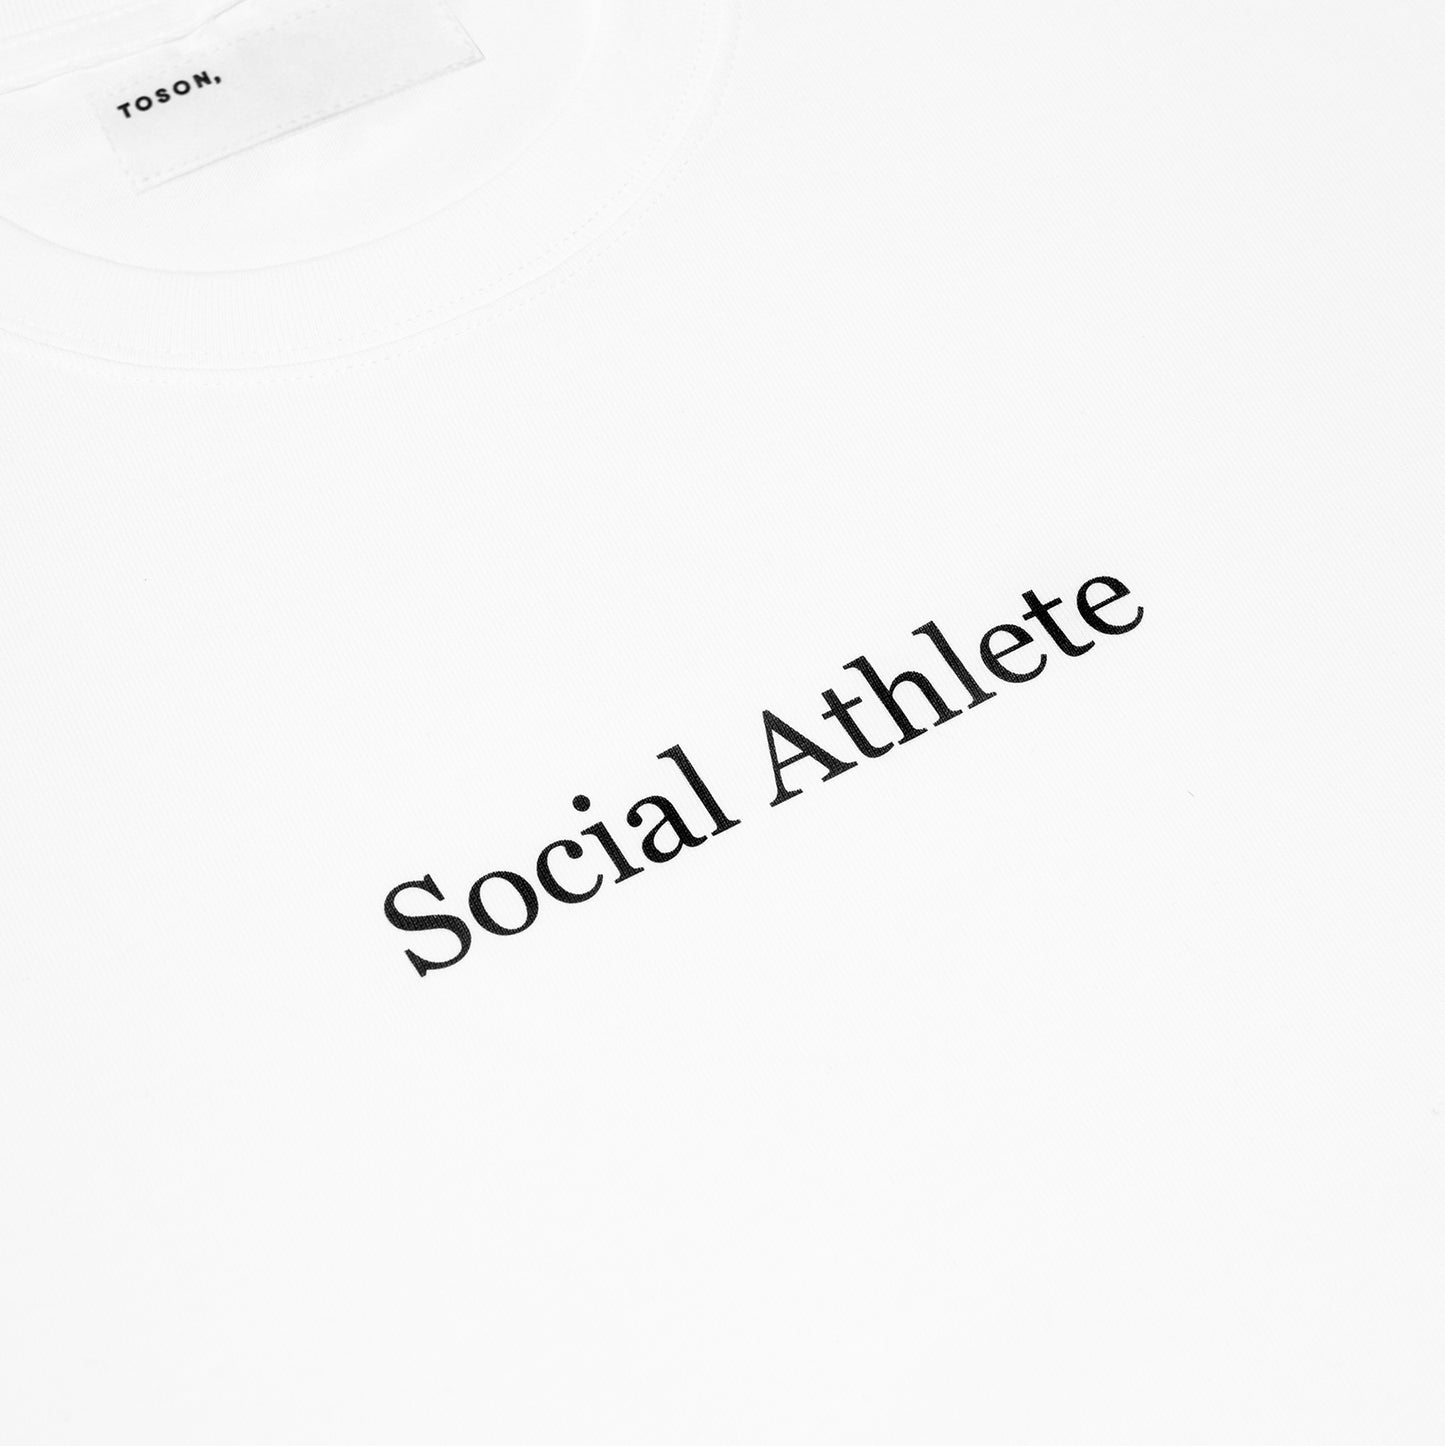 "Social Athlete" Print T-shirt